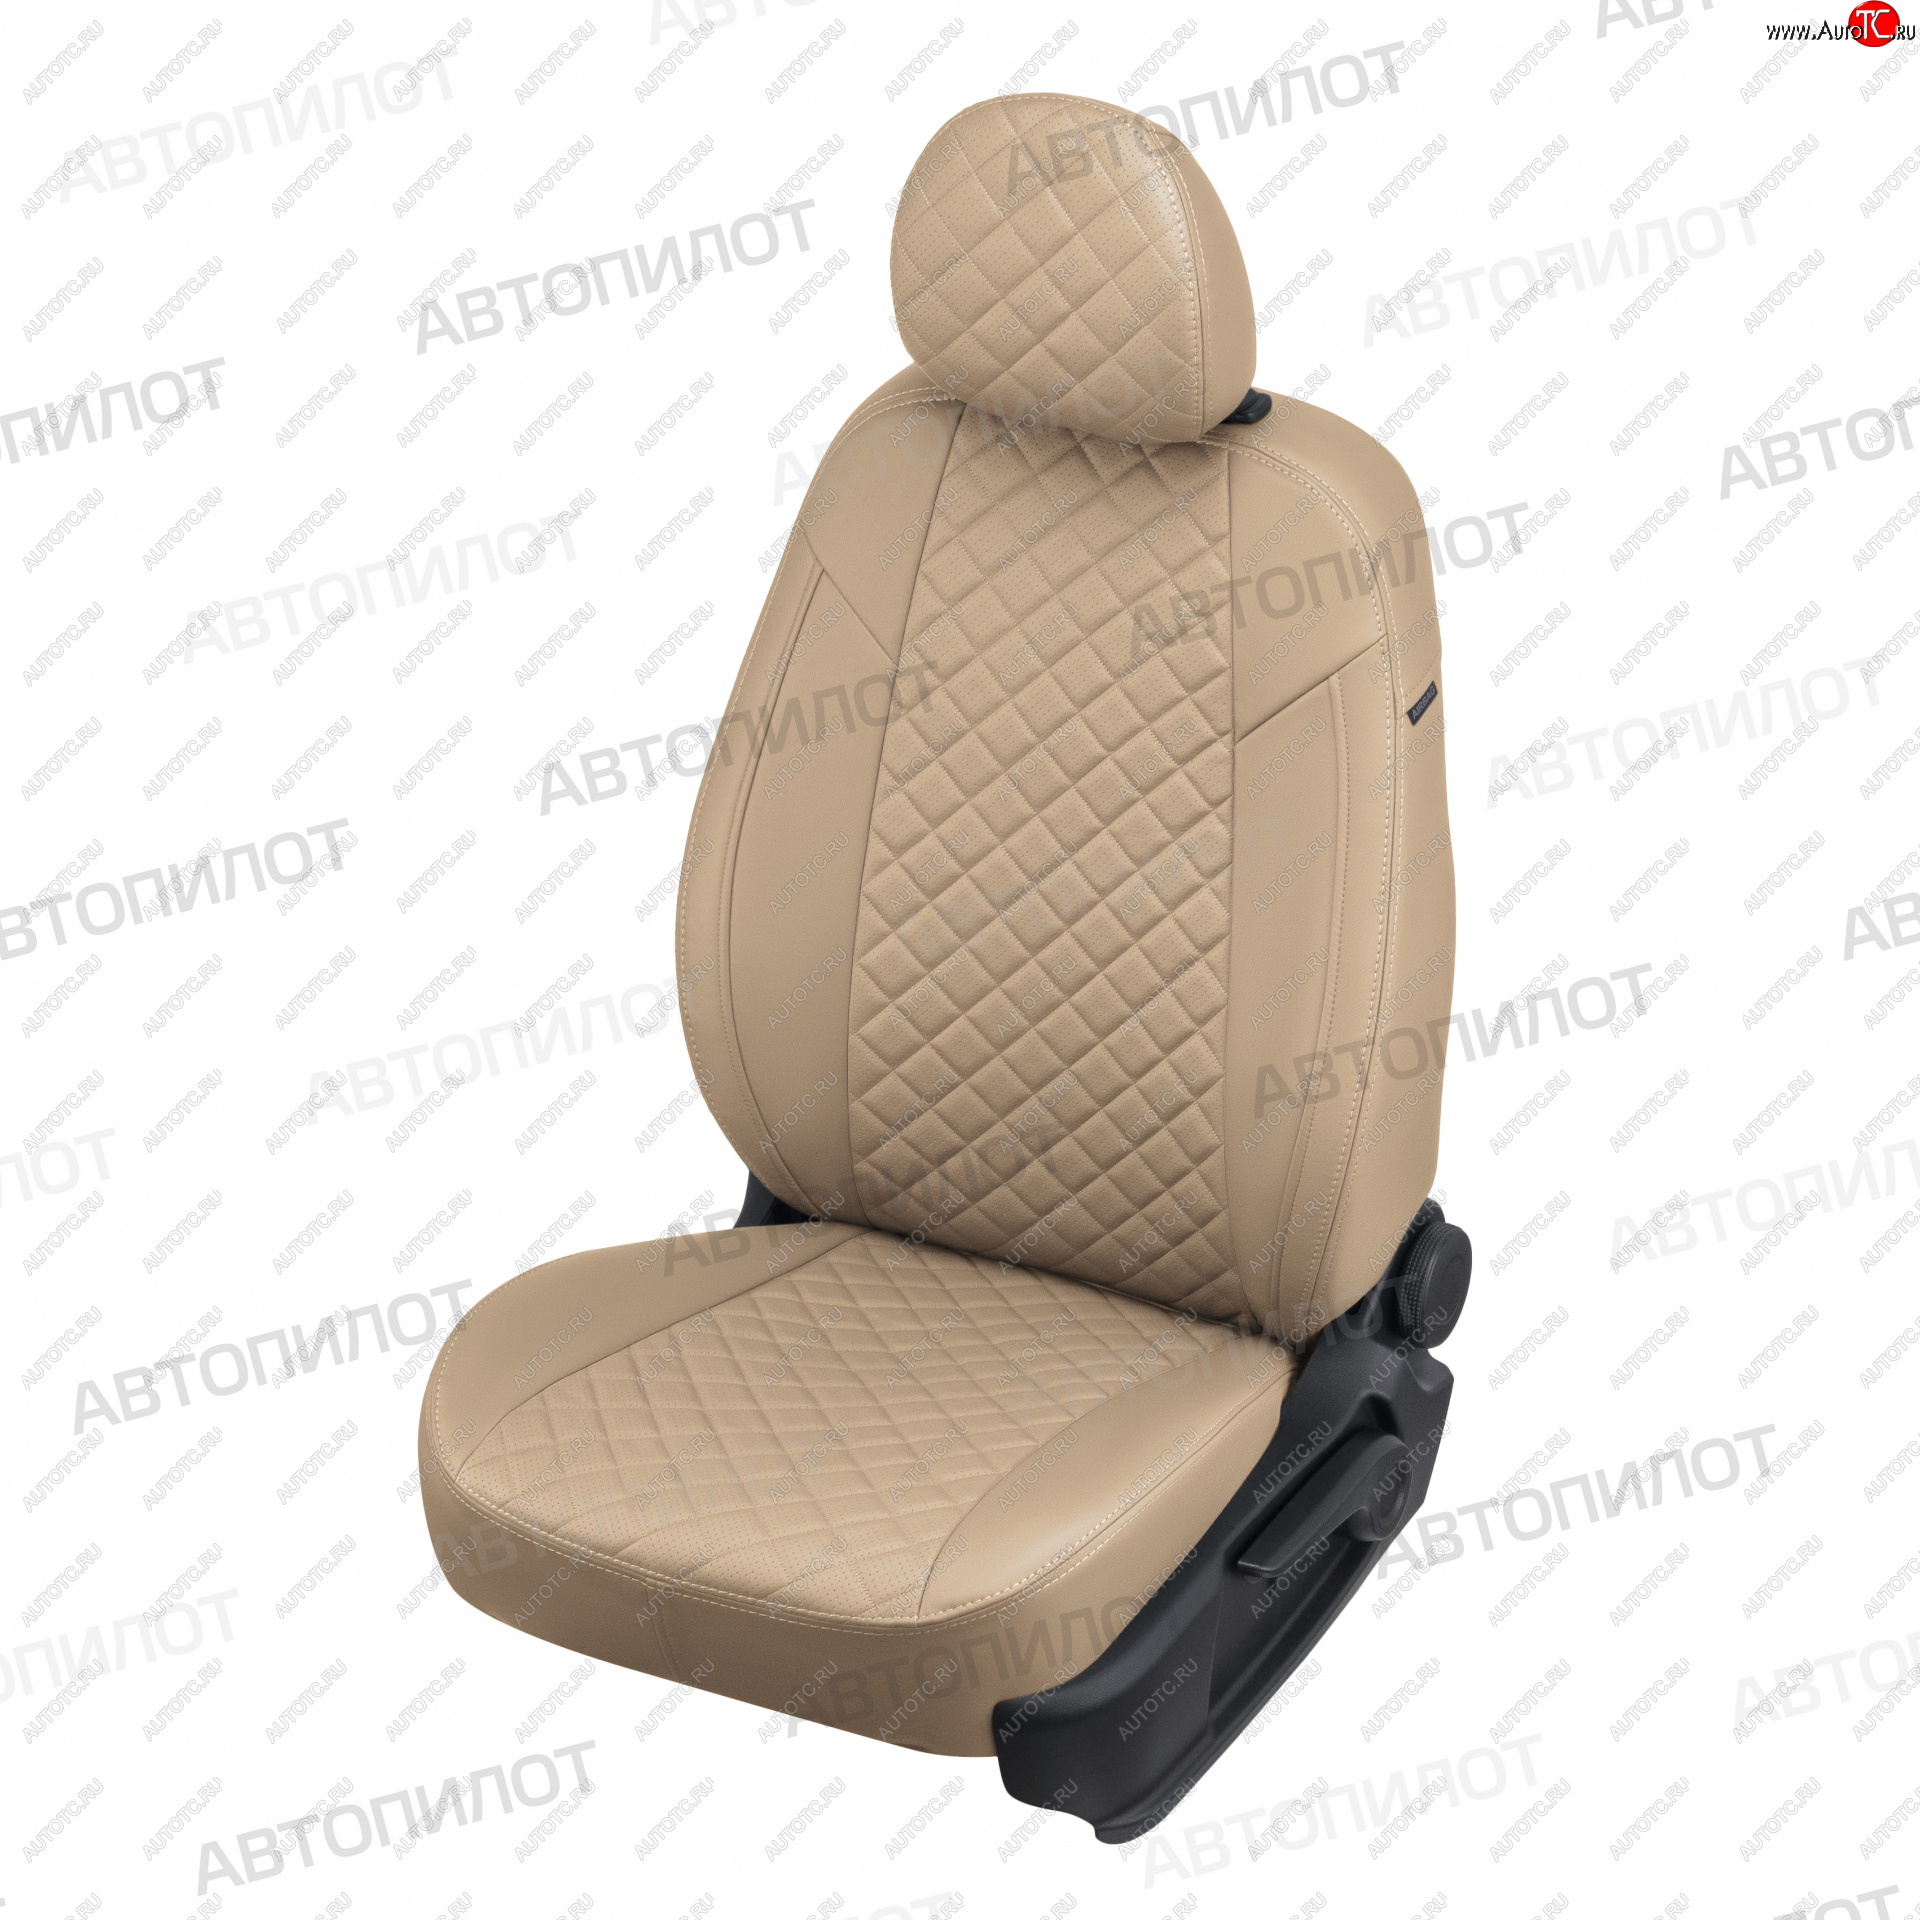 13 999 р. Чехлы сидений (экокожа) Автопилот Ромб  Hyundai Sonata  YF (2009-2014) (темно-бежевый)